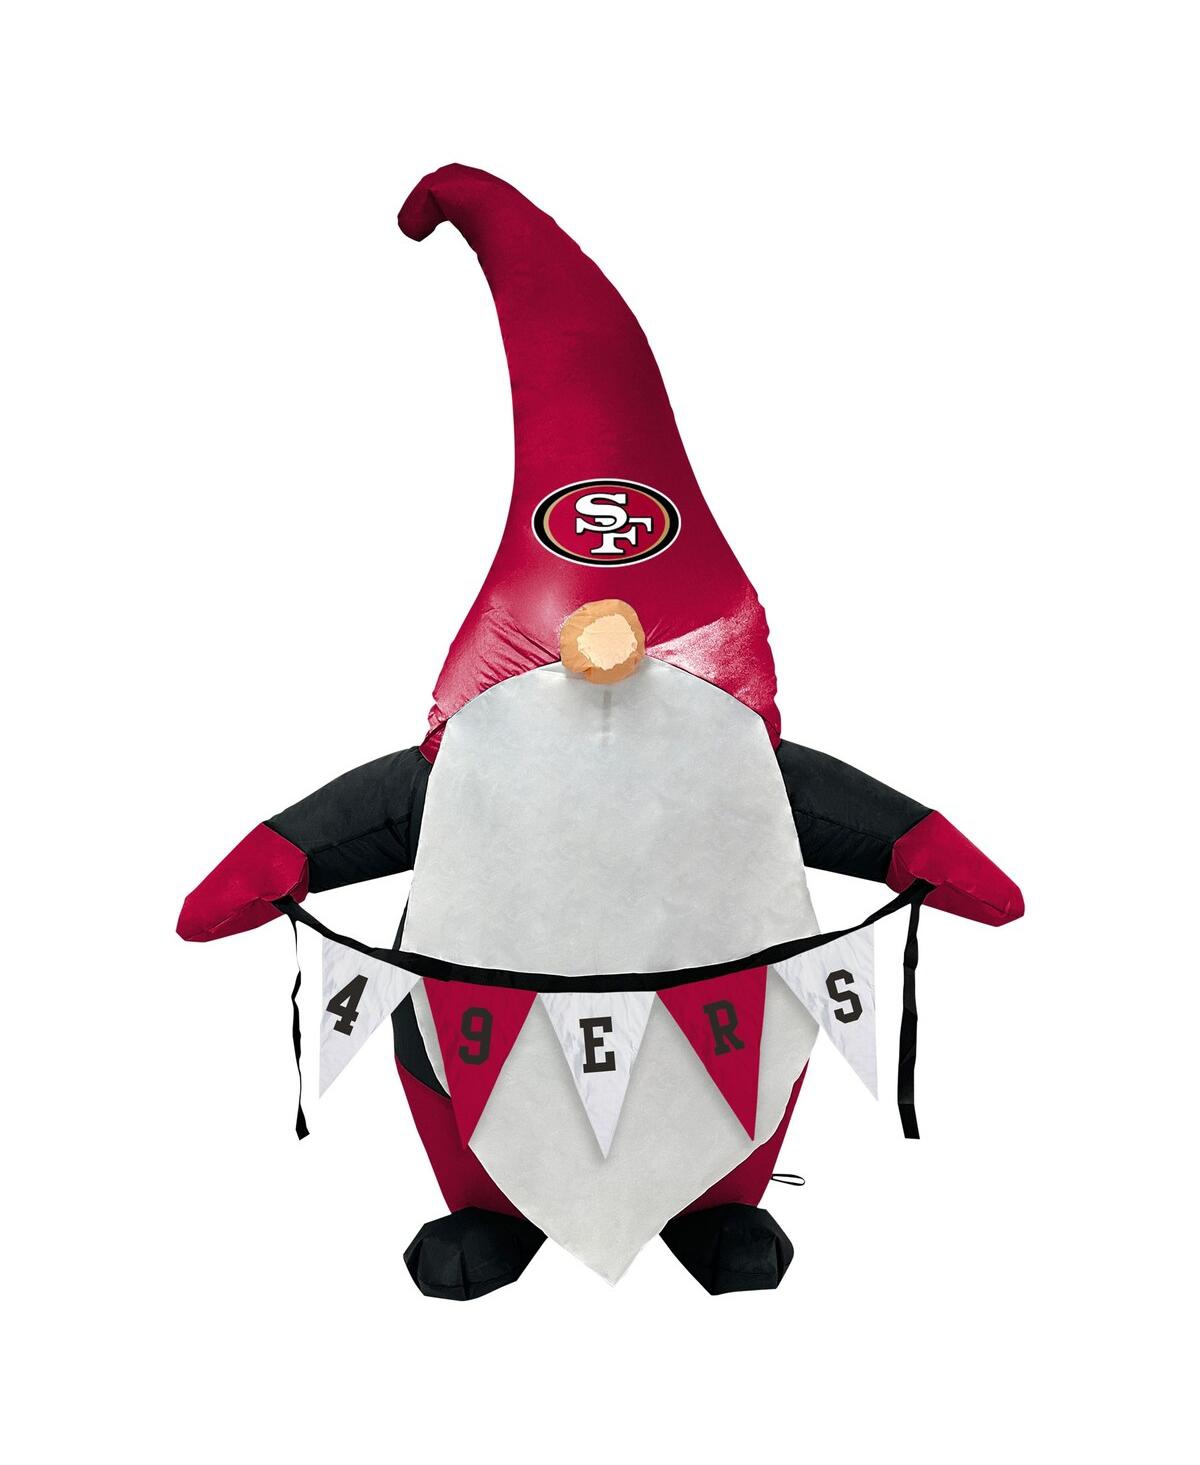 Pegasus San Francisco 49ers Inflatable Gnome - Multi